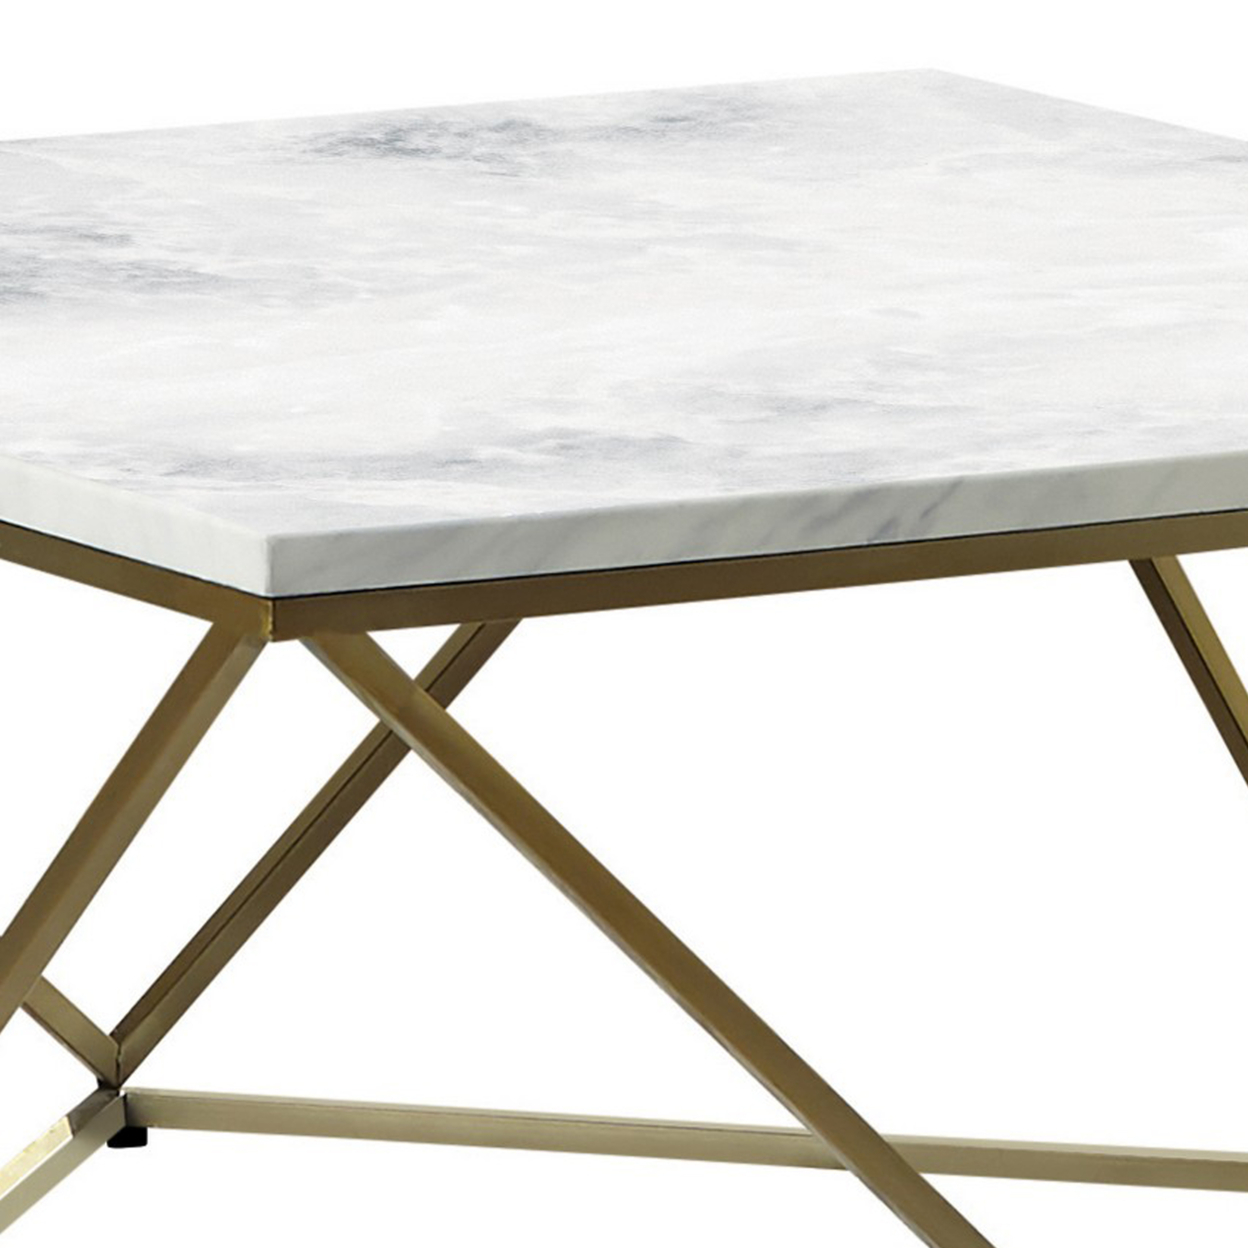 36 Inch Modern Square Coffee Table, White Faux Marble Top, Slender Gold Base- Saltoro Sherpi